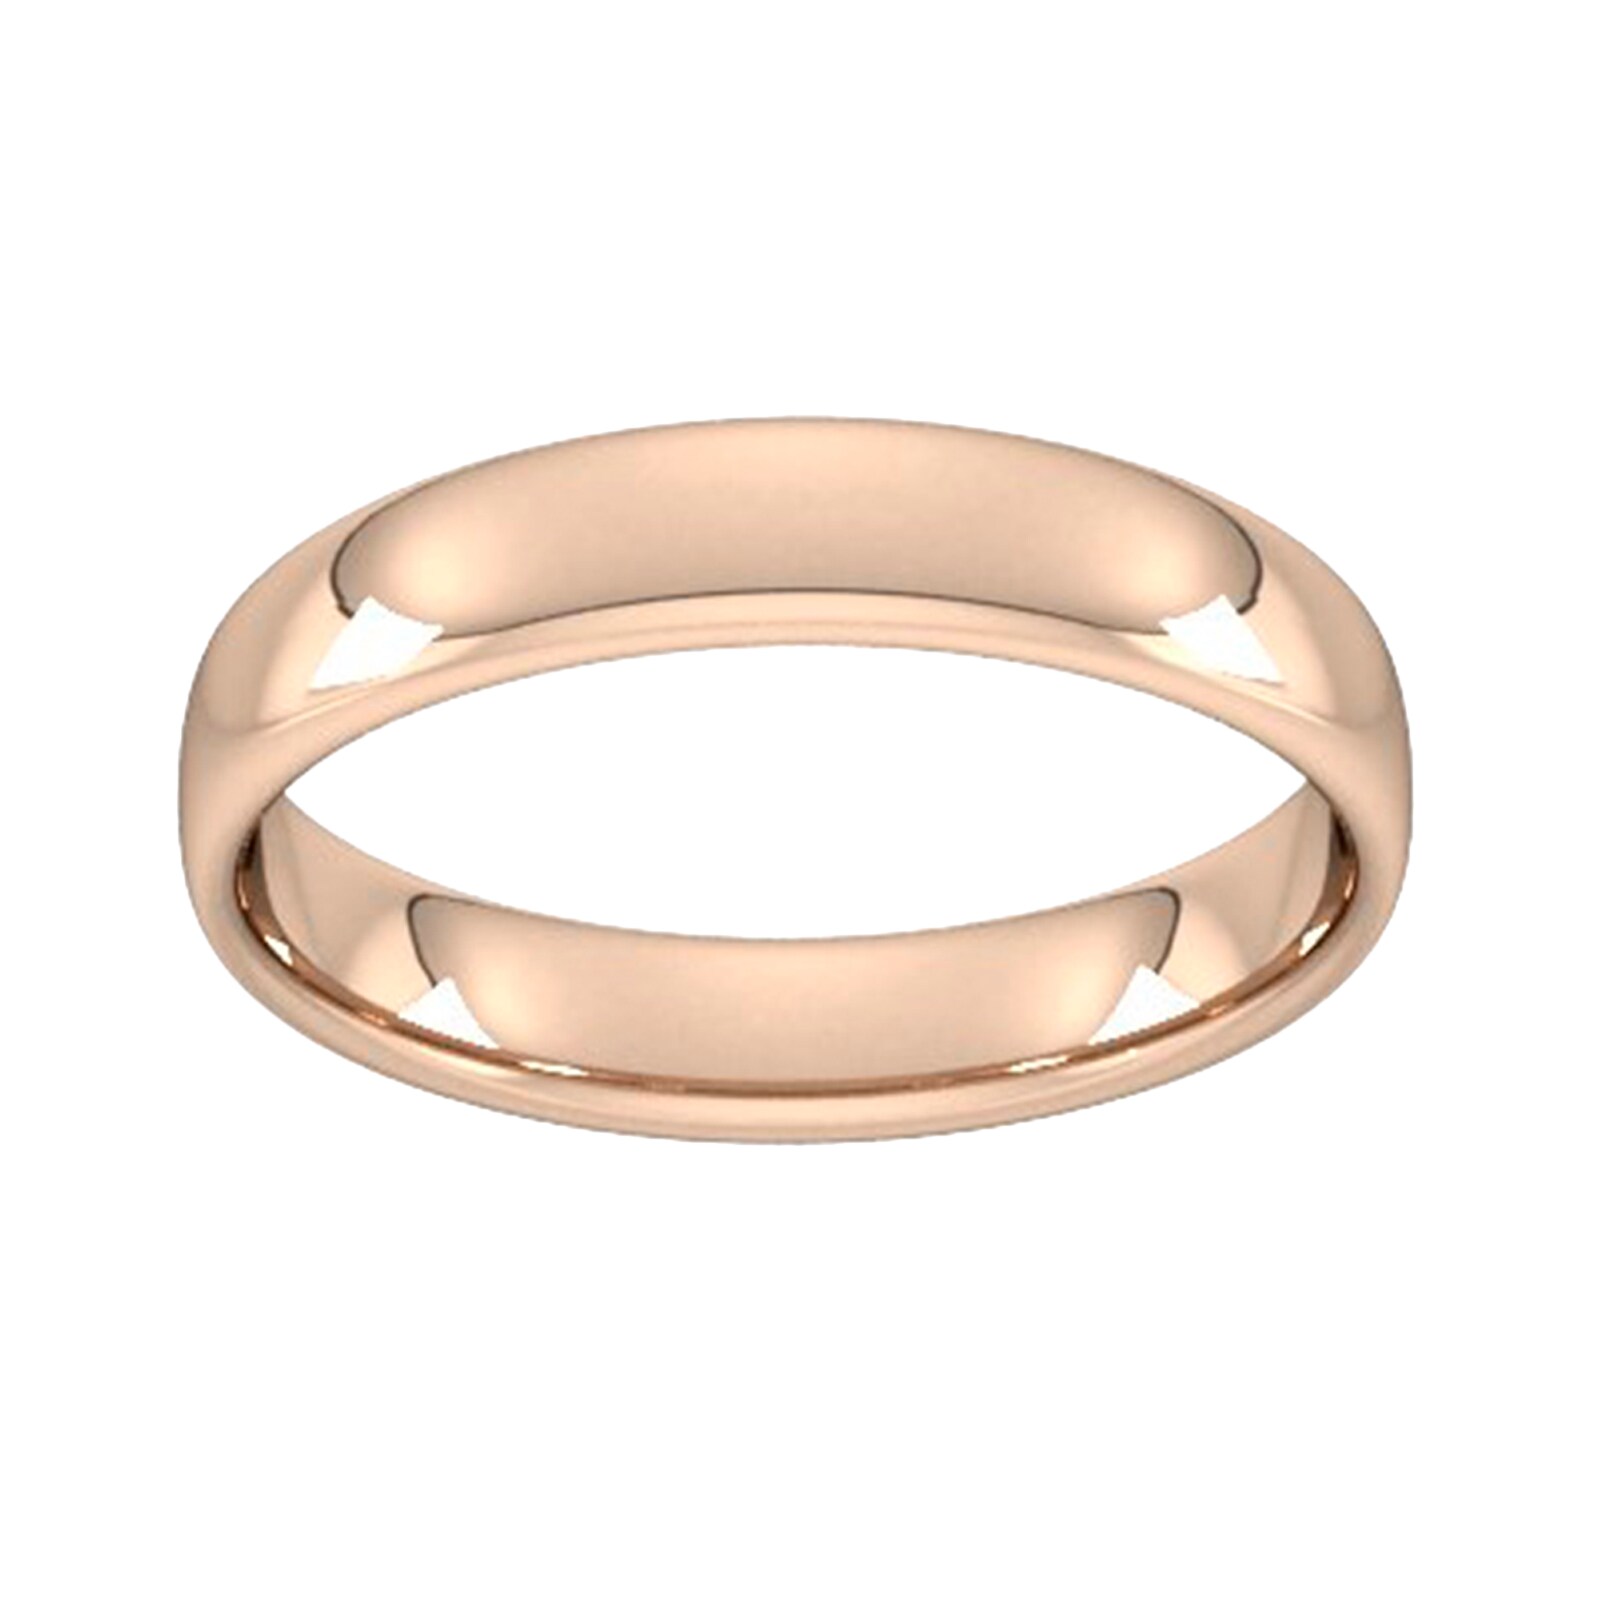 4mm Slight Court Standard Wedding Ring In 9 Carat Rose Gold - Ring Size Q